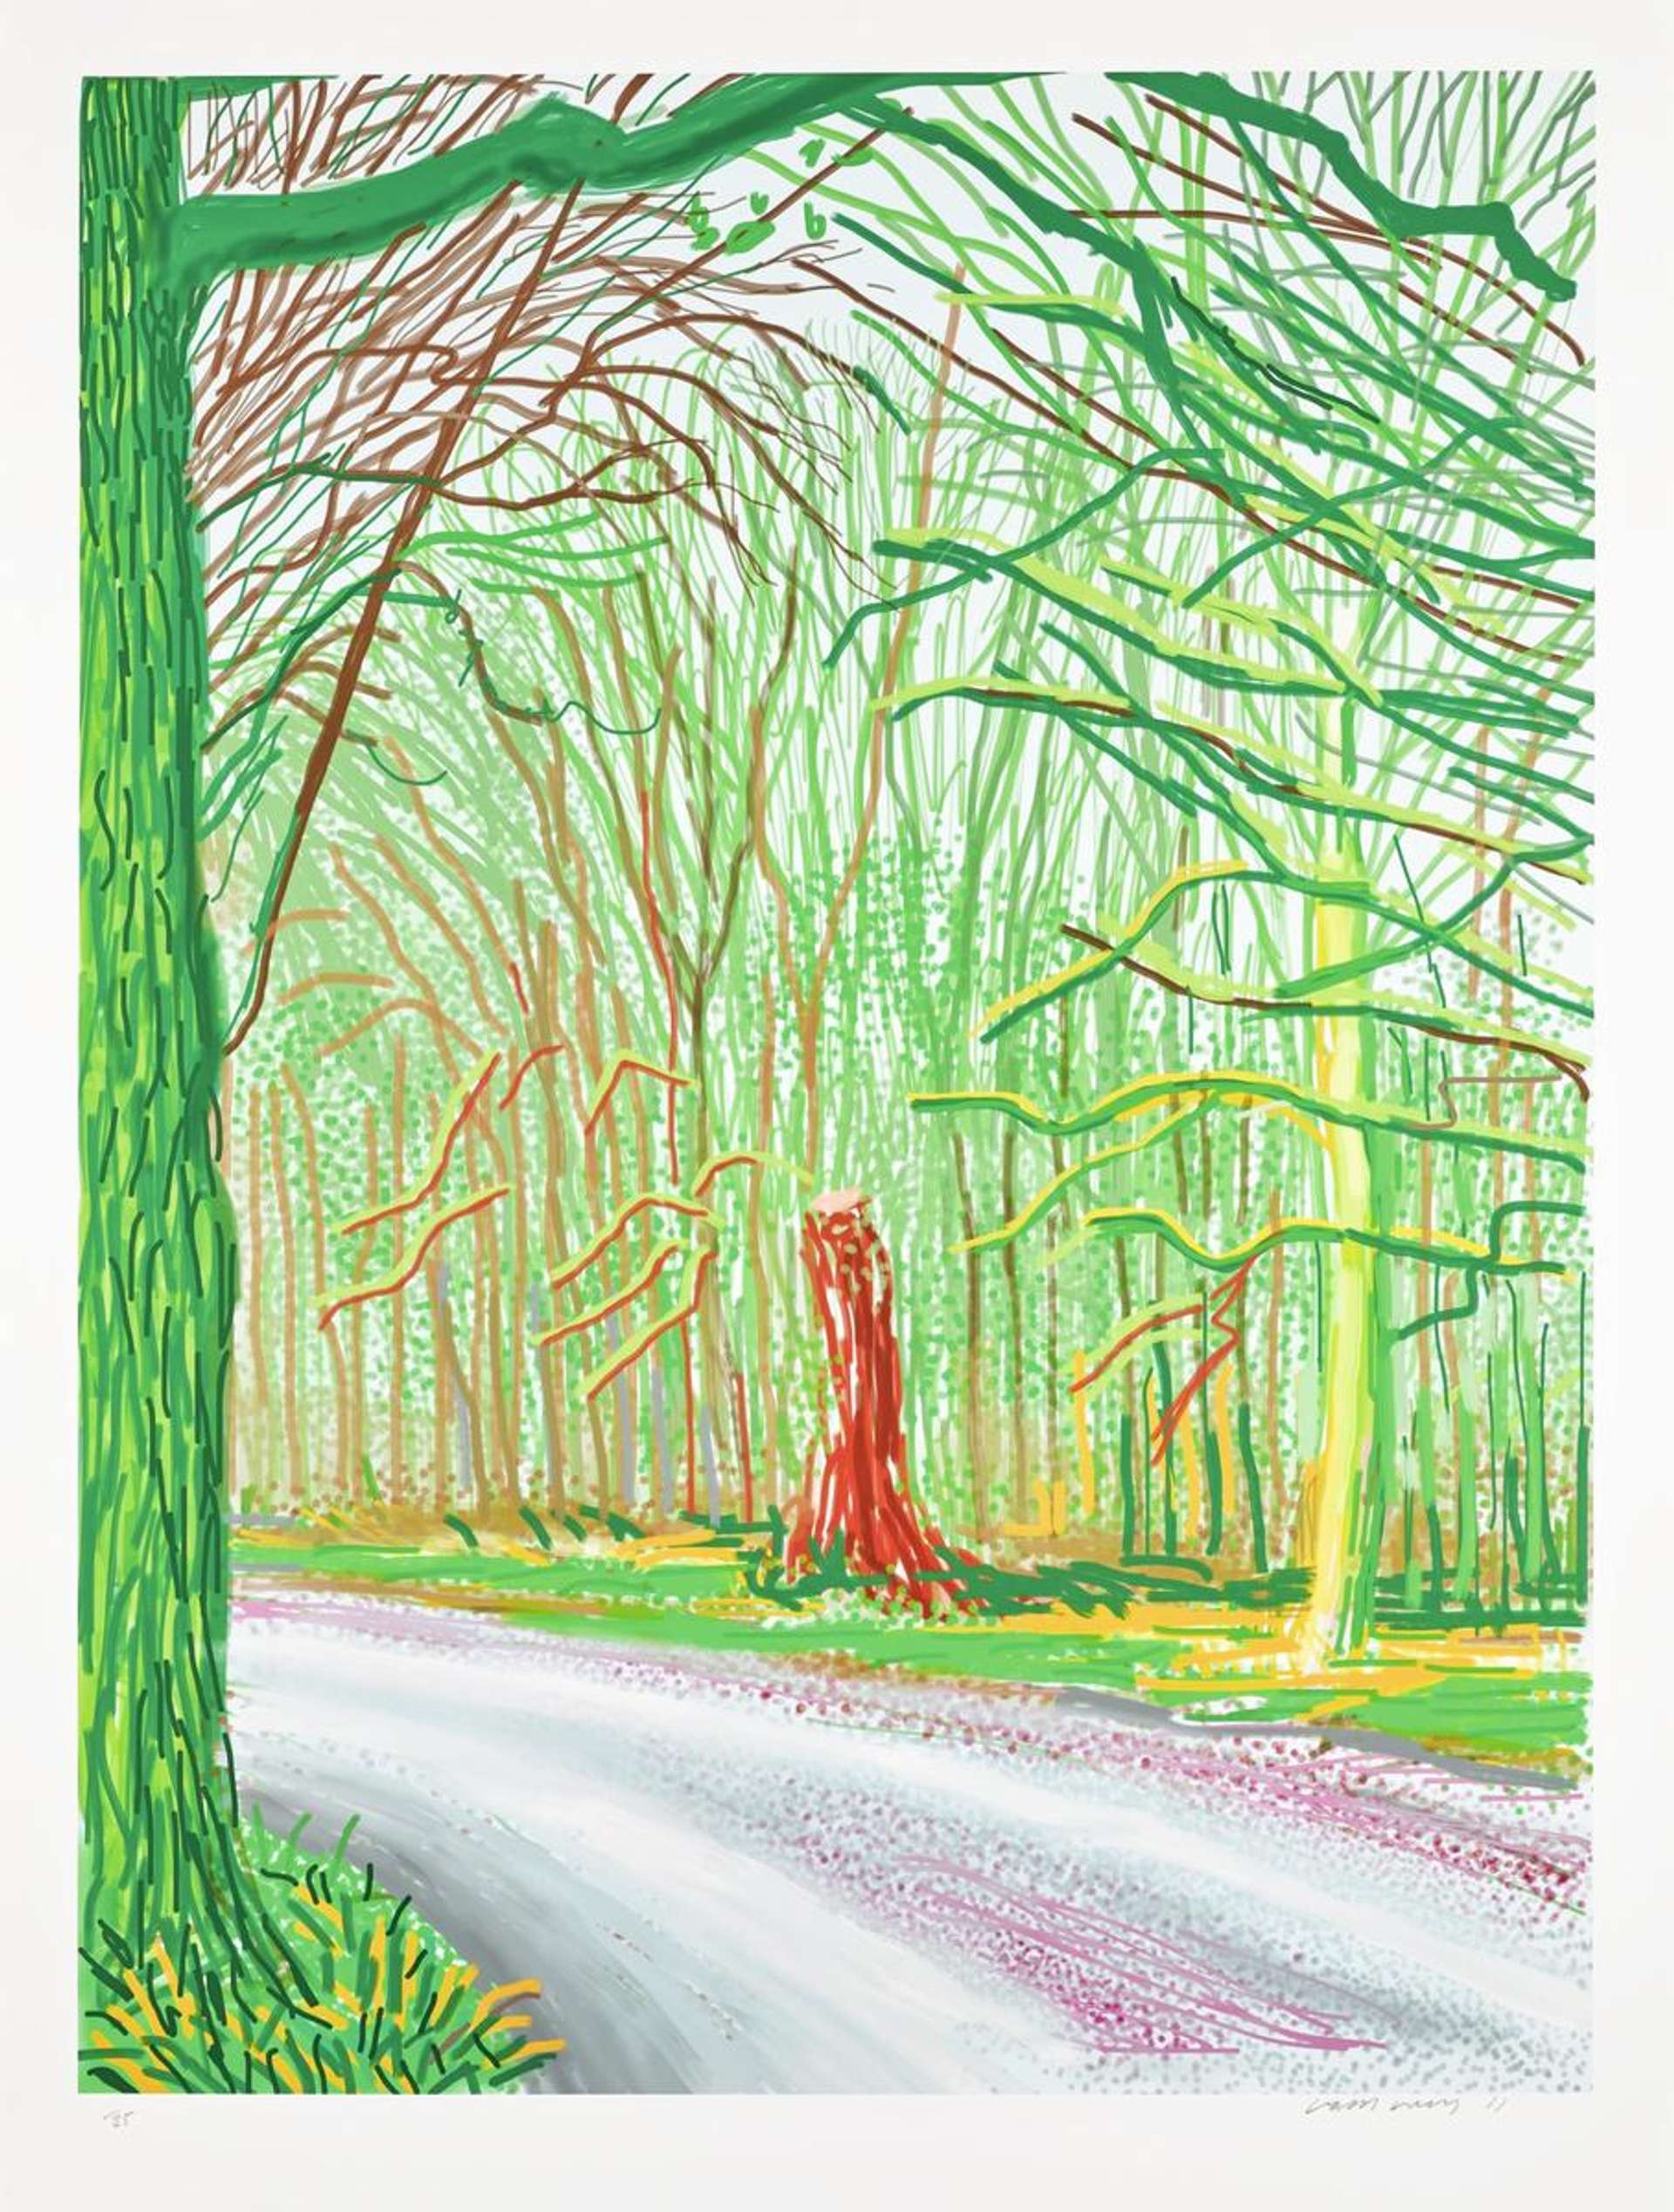 David Hockney: The Arrival Of Spring In Woldgate East Yorkshire 23rd April 2011 - Signed Print